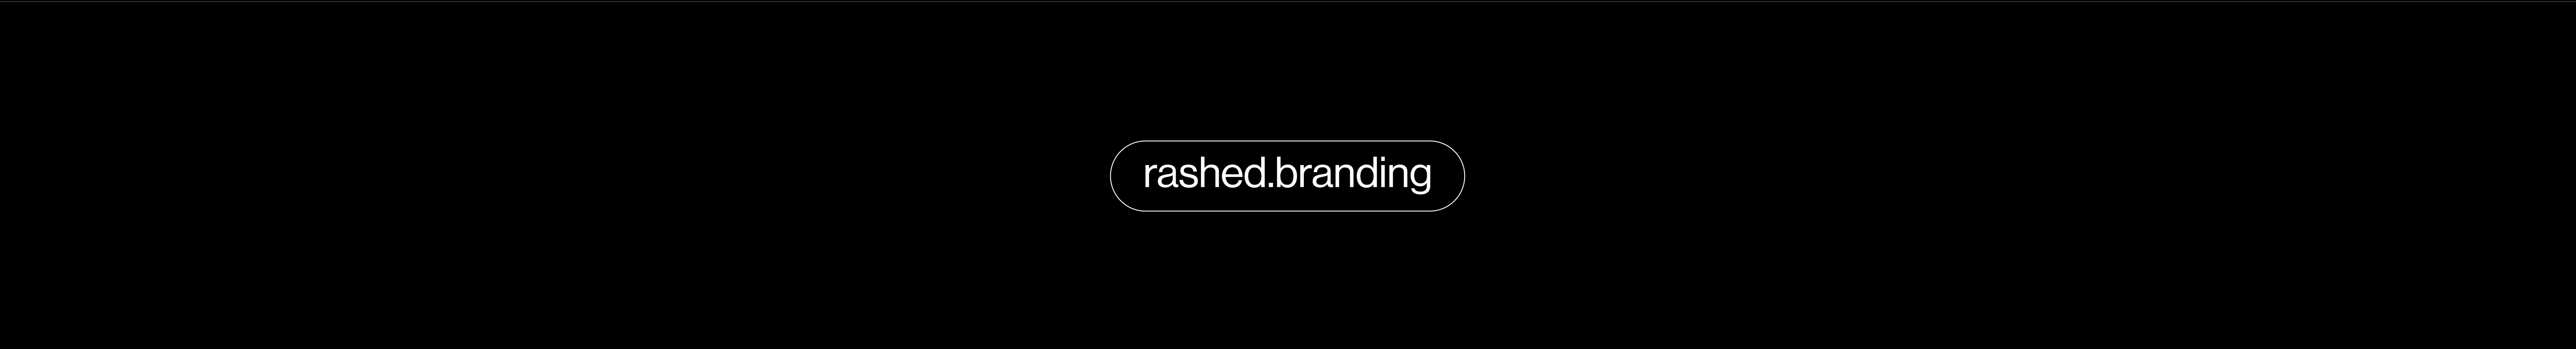 rashed branding's profile banner